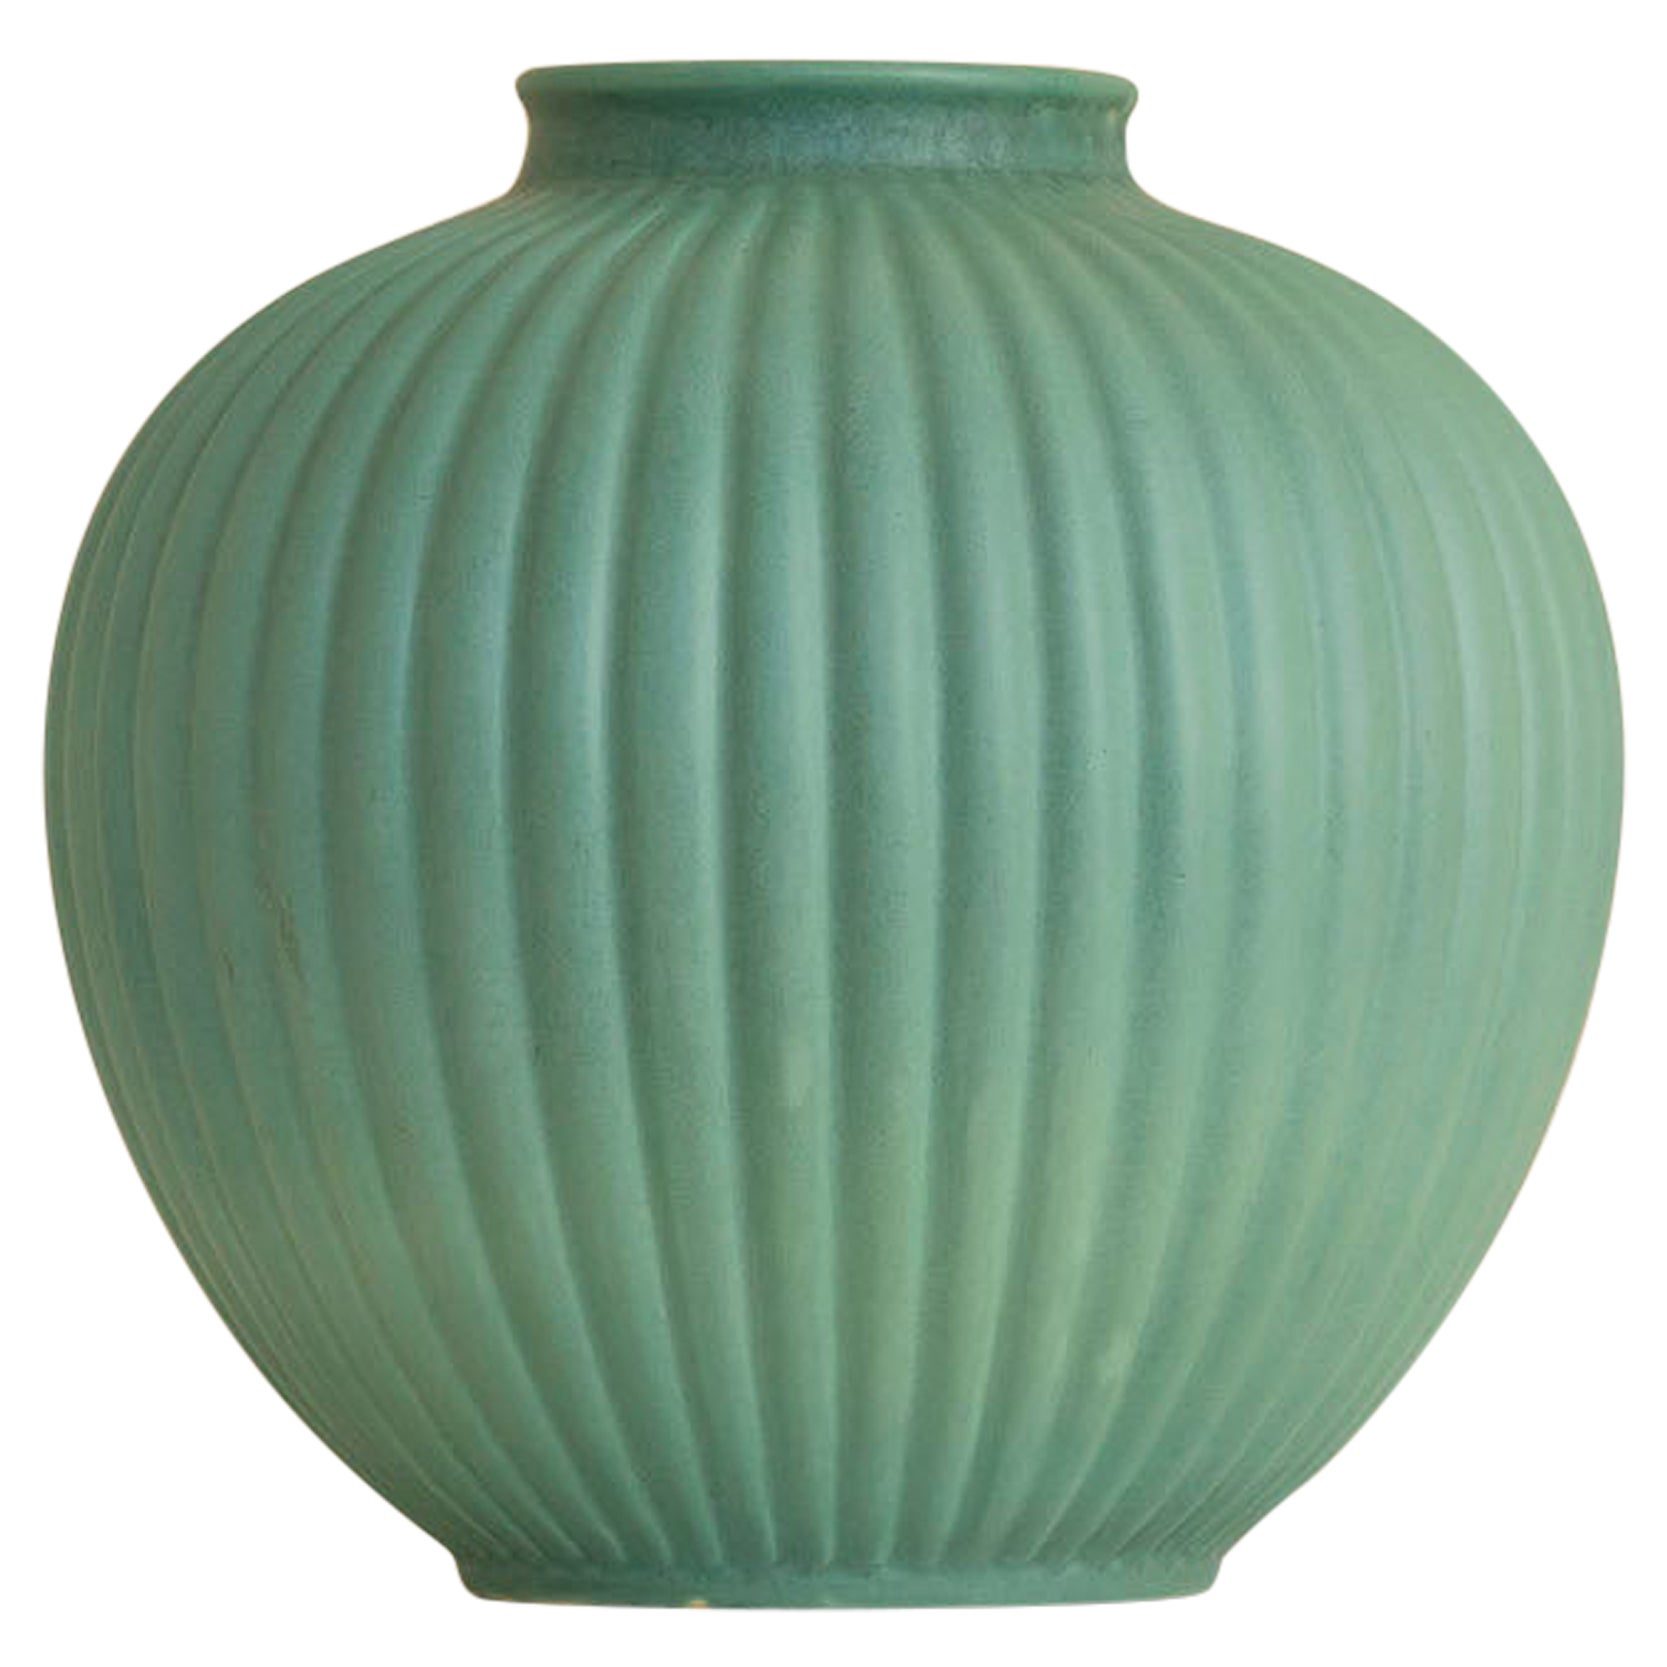 Midcentury ceramic vase by Gio Ponti for Richard Ginori, Italy 1947 